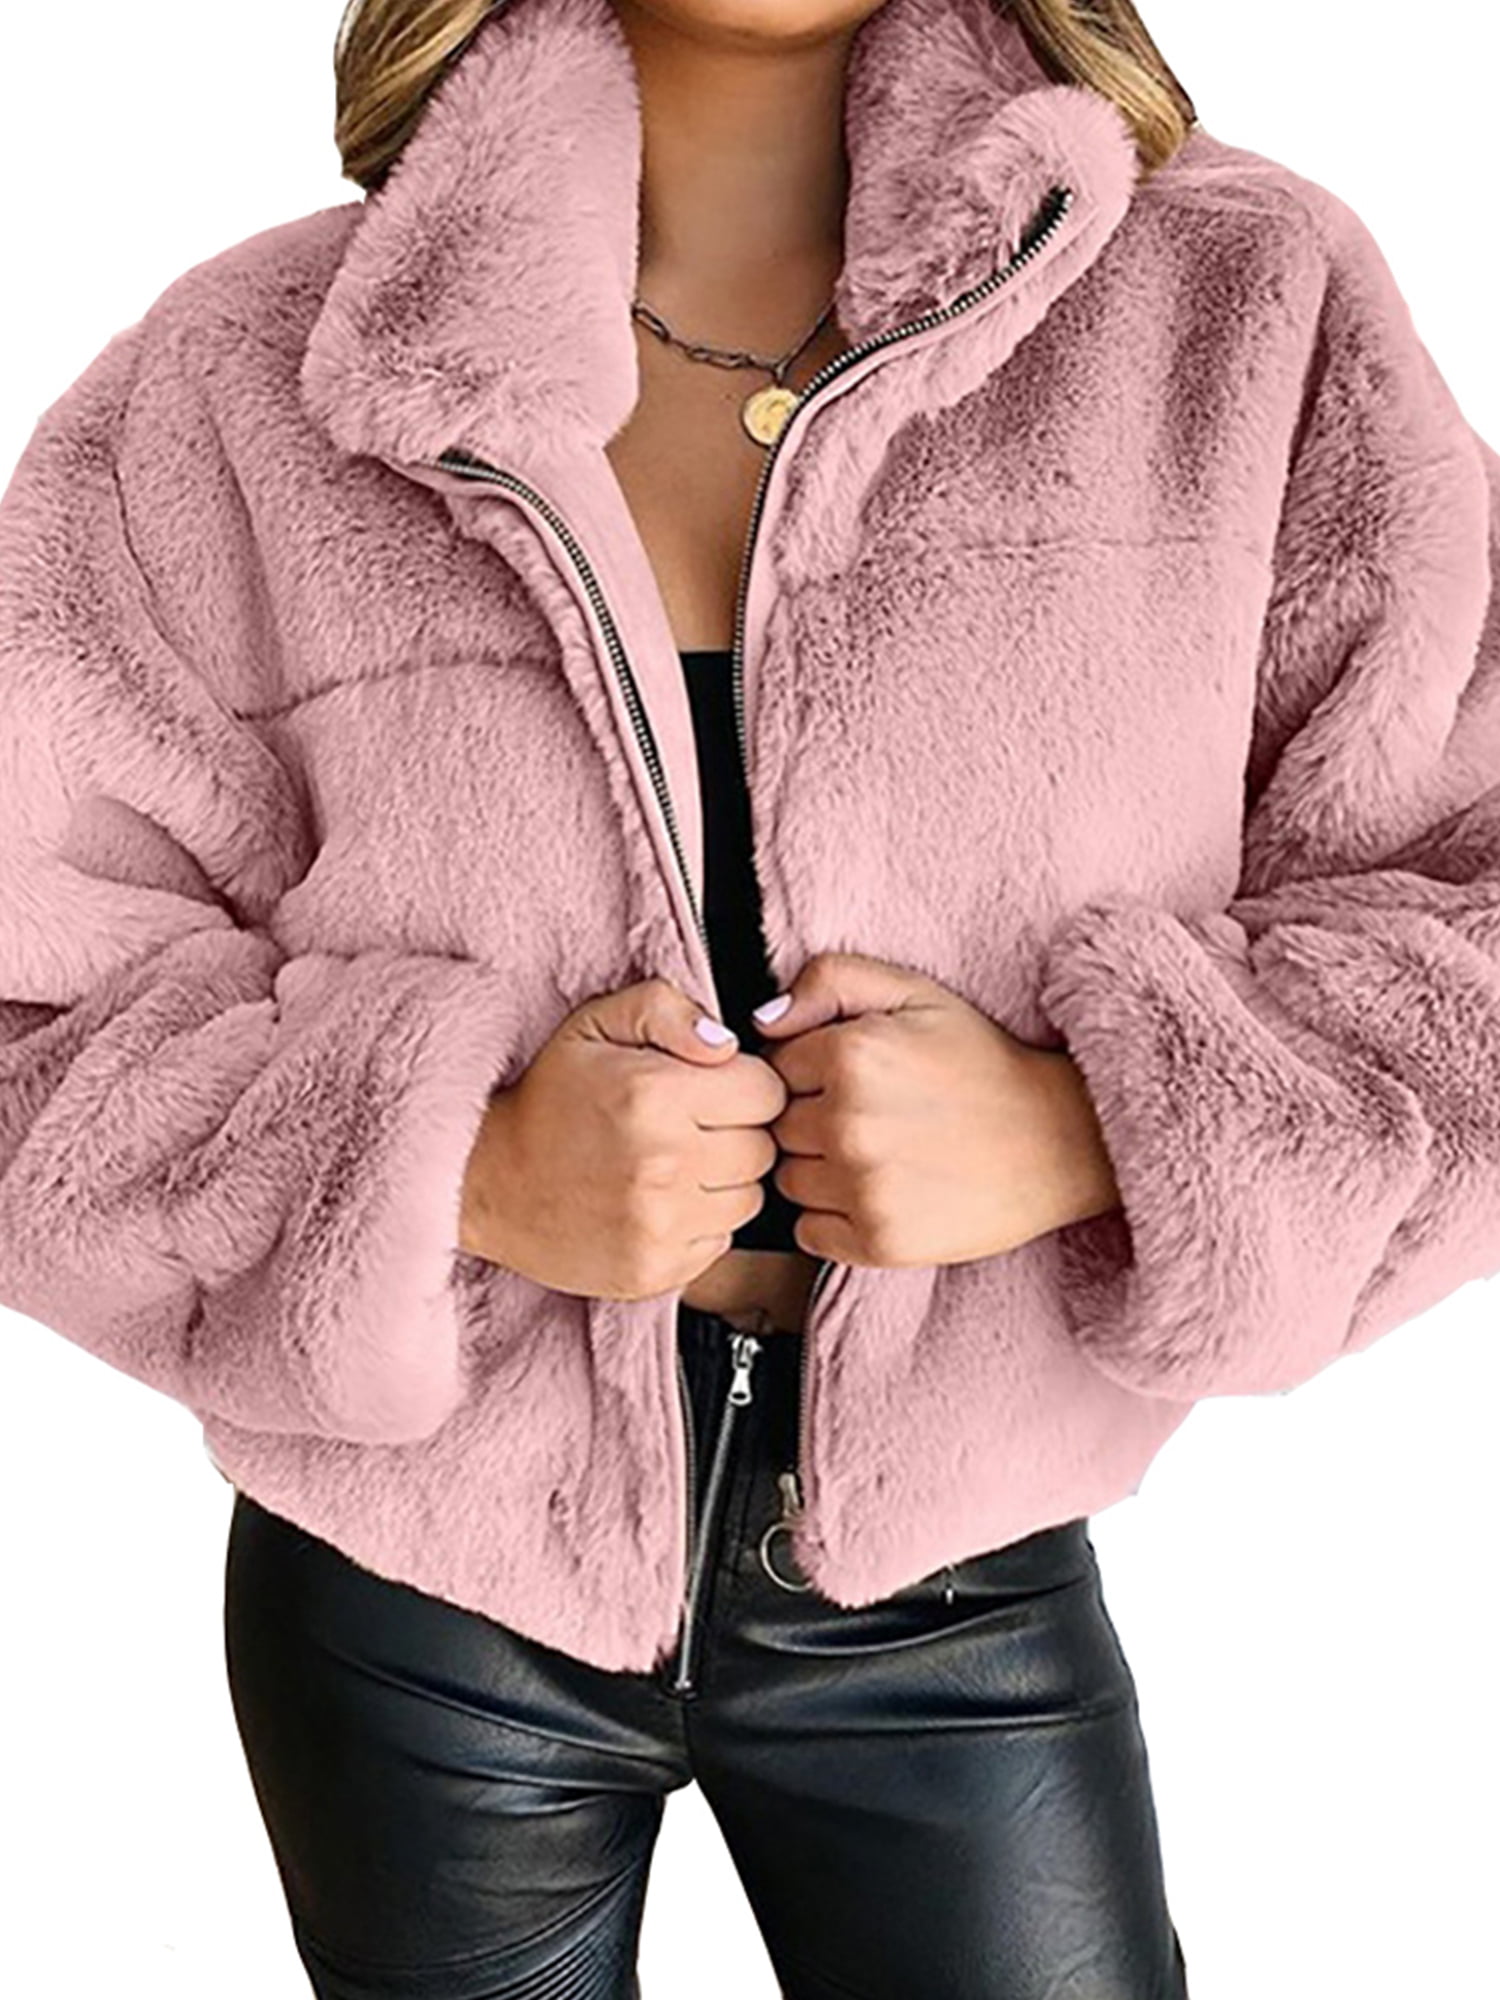 US Womens Winter Warm Faux Fur Coat Overcoat Ladies Cardigan Jacket Tops Outwear 